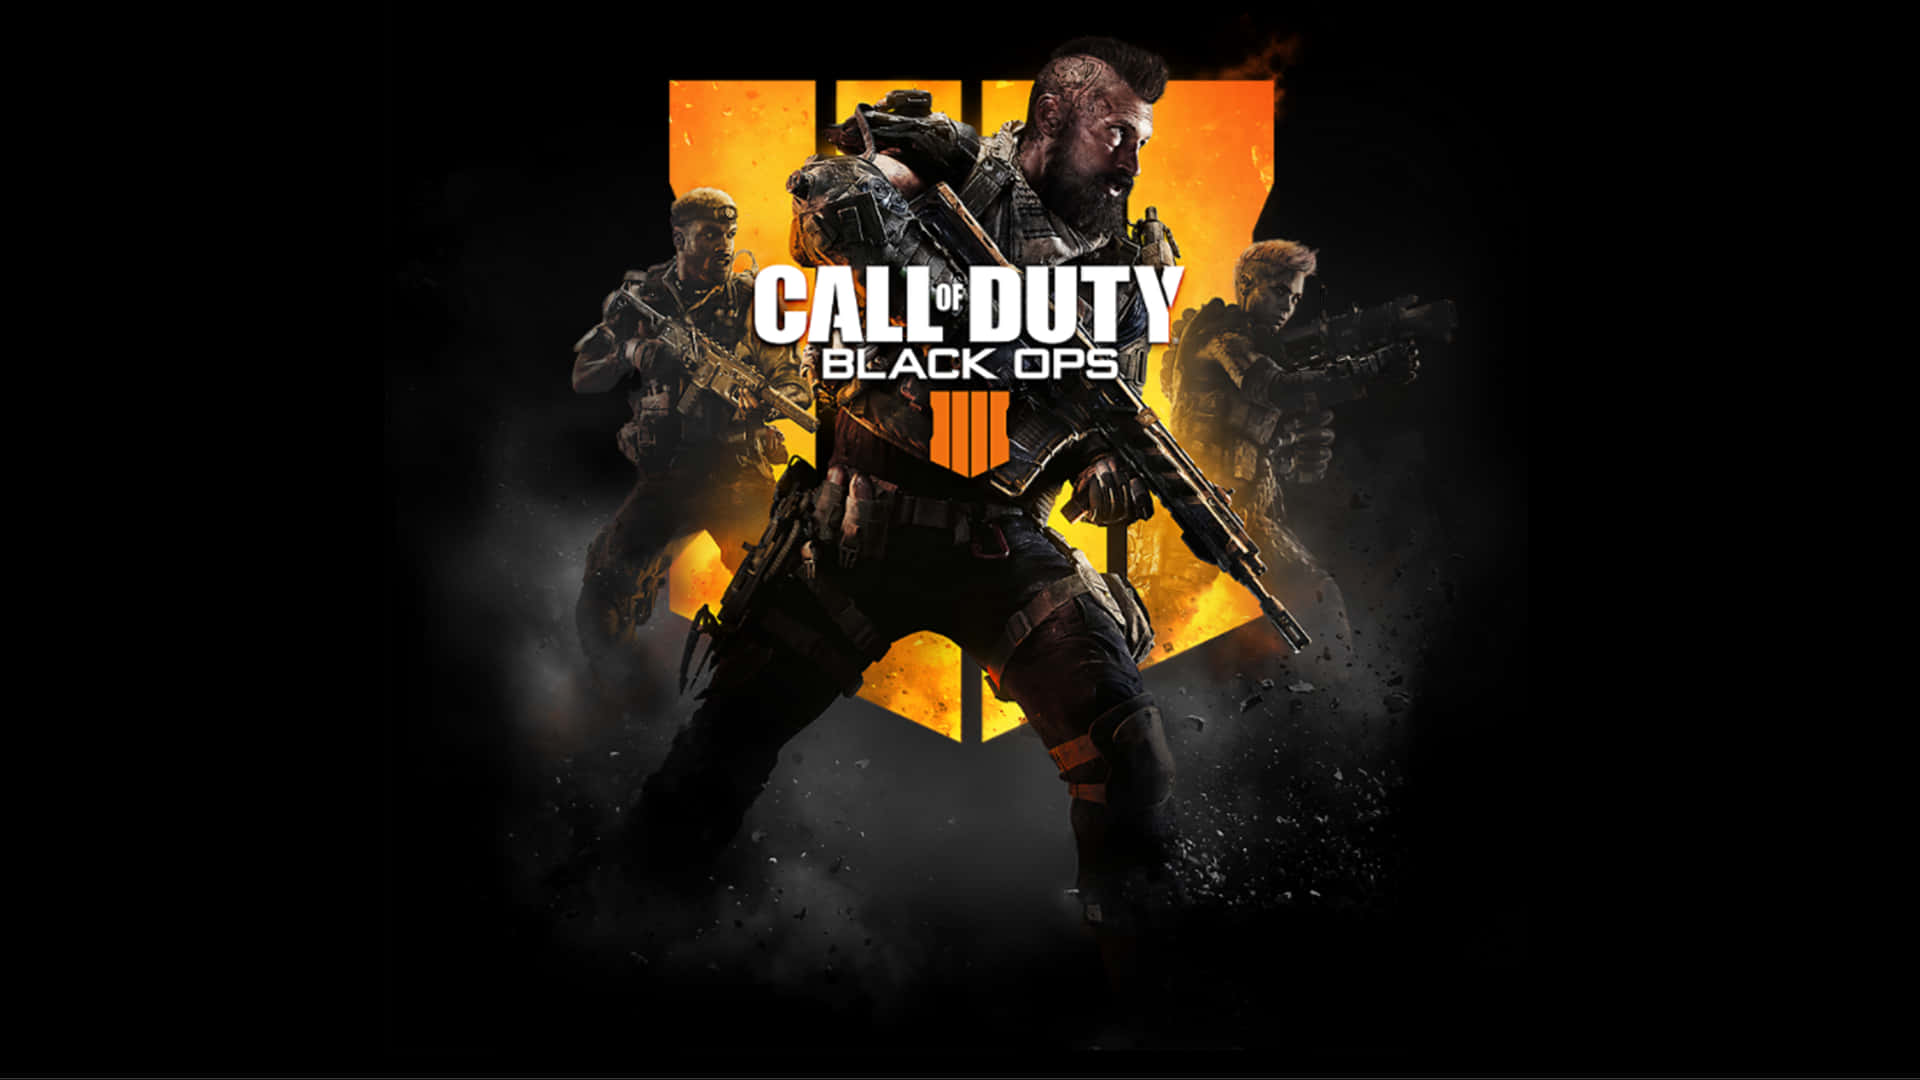 Alos Jugadores Les Encantará Este Fondo Ultra-hd De Best Call Of Duty Black Ops 4.